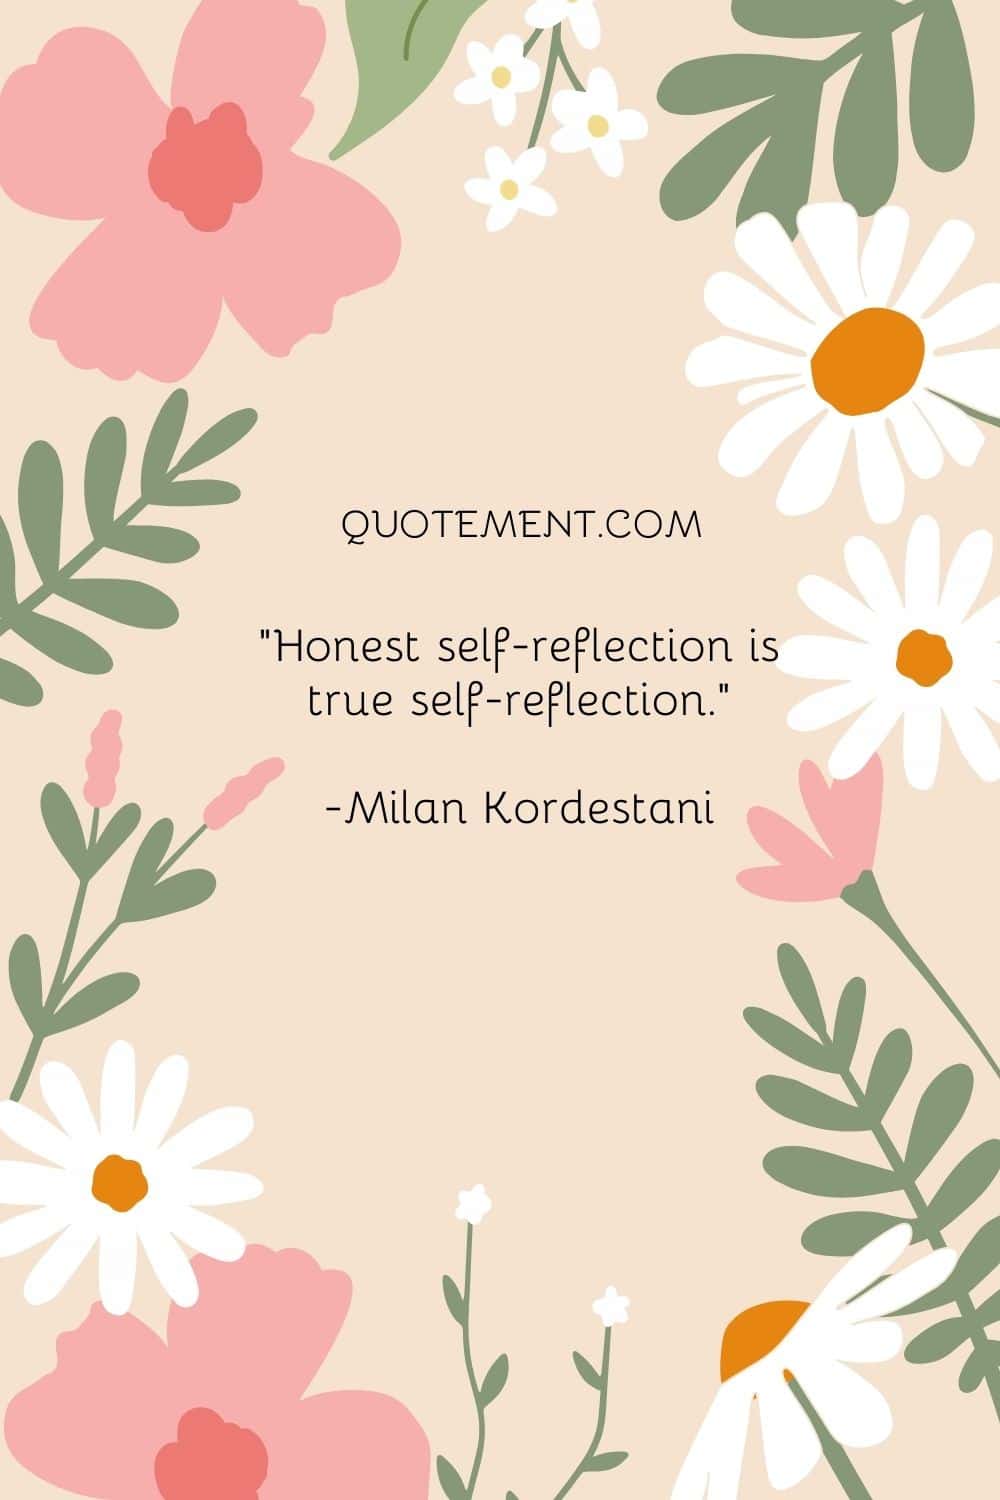 Honest self-reflection is true self-reflection.